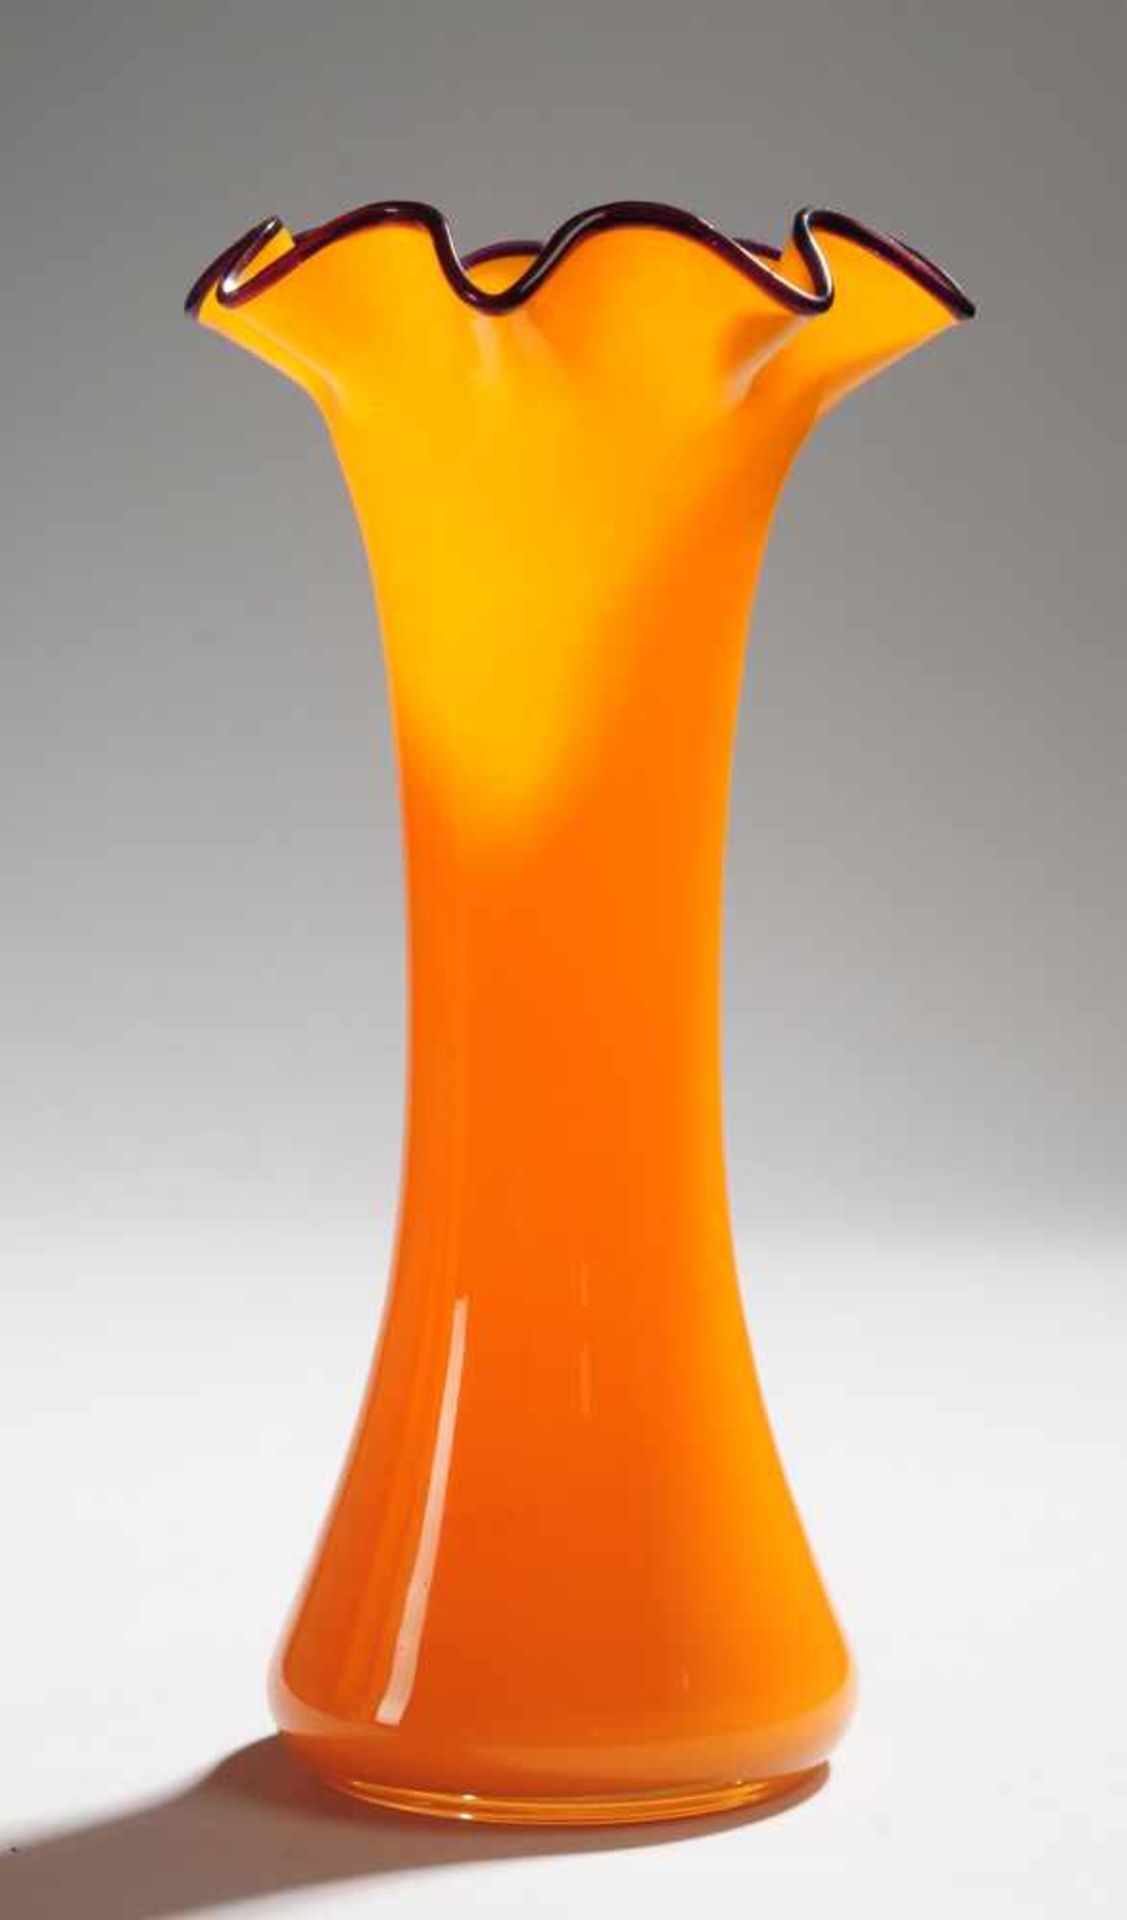 Tango-VaseOrangefarbenes Opalglas, farblos überfangen. Formgeblasen, ausgekugelter Abriss. Konkav